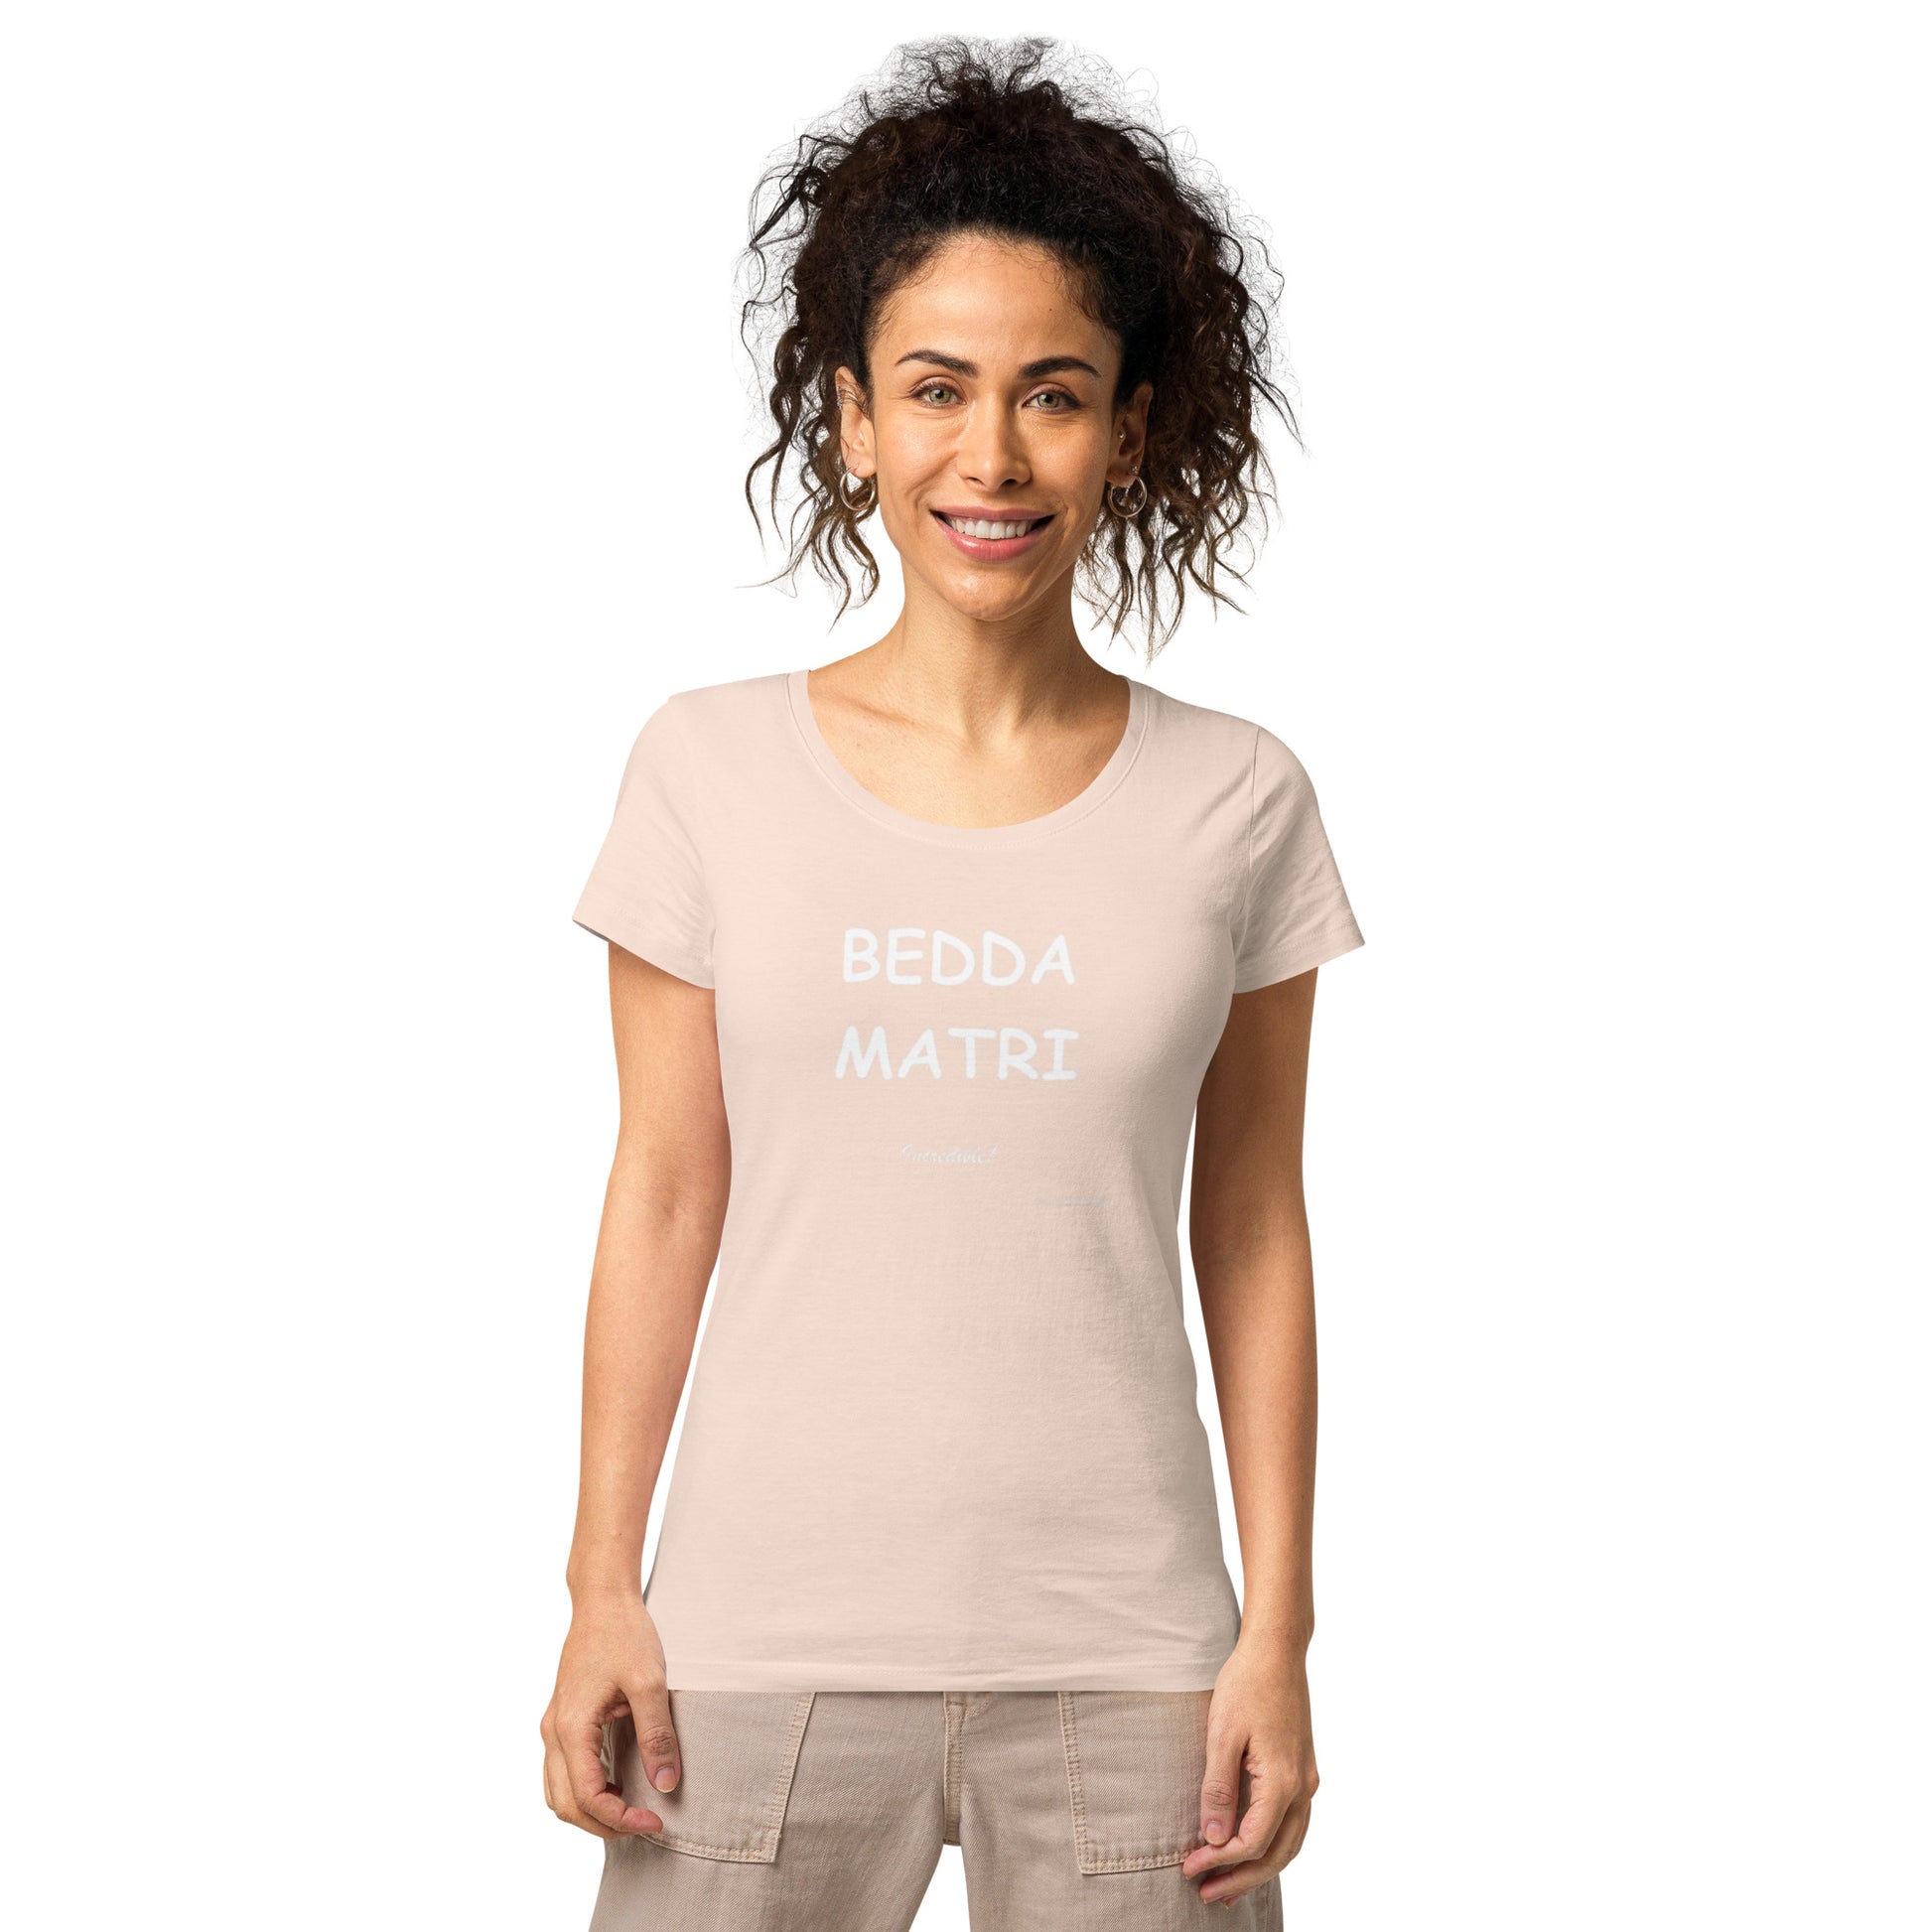 T-shirt da donna basica in tessuto organico - Fenomenologia Shop